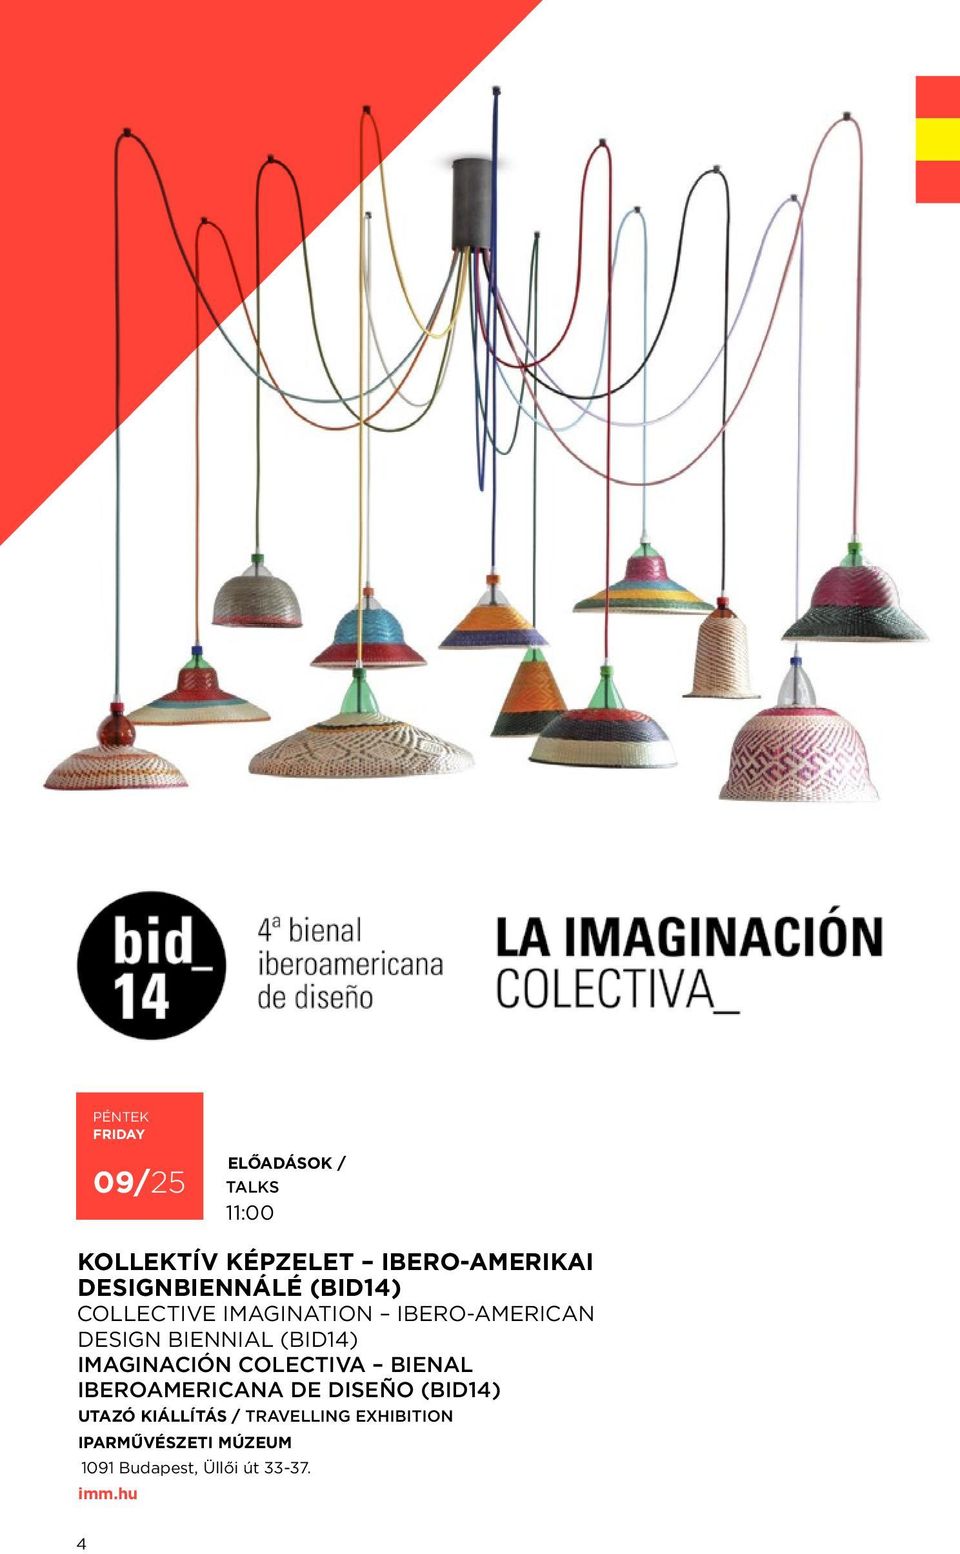 (BID14) Imaginación Colectiva Bienal Iberoamericana de Diseño (BID14) utazó